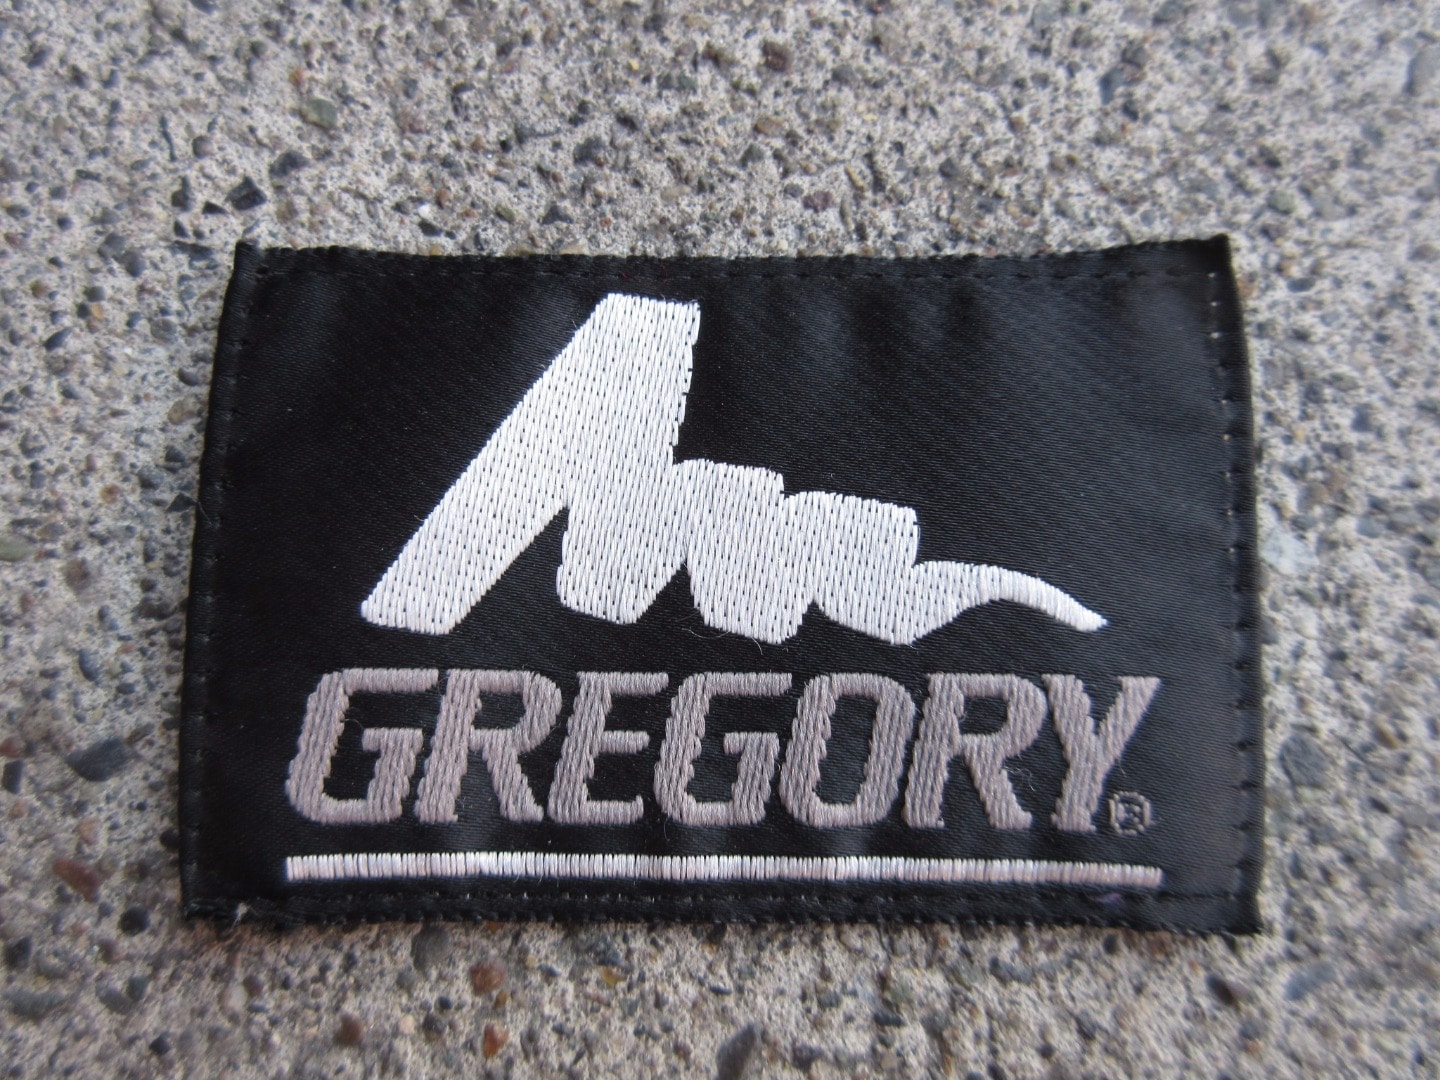 All About GREGORY Product:2 「紫タグ」と「シルバータグ」のディテール変化